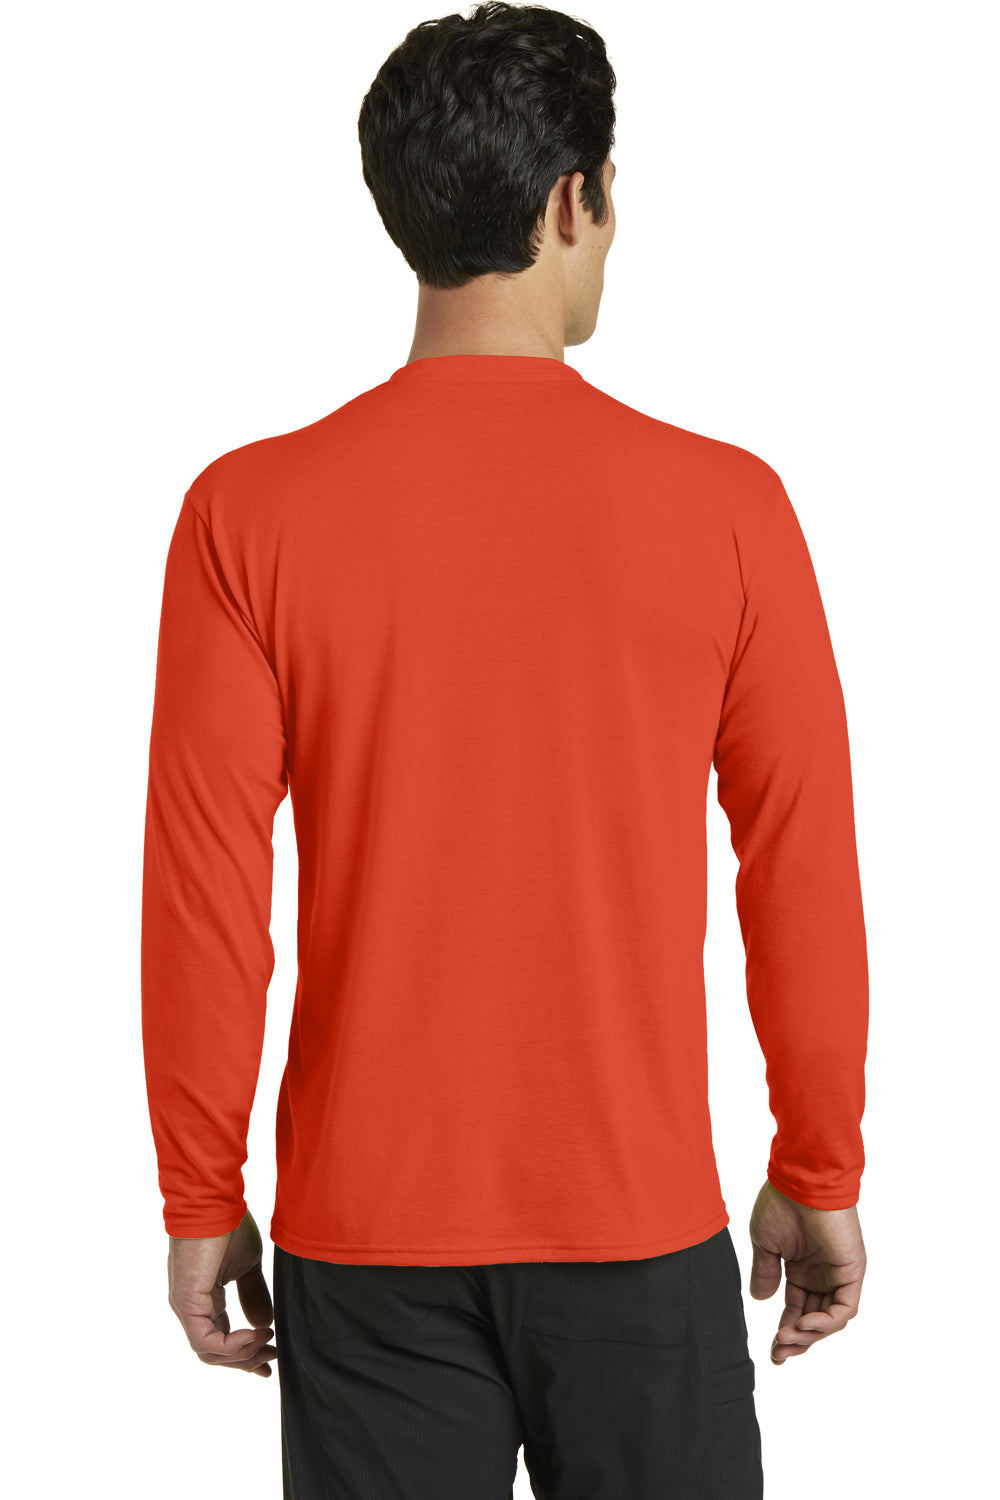 Port & Company PC381LS Mens Dry Zone Performance Moisture Wicking Long Sleeve Crewneck T-Shirt Orange Back